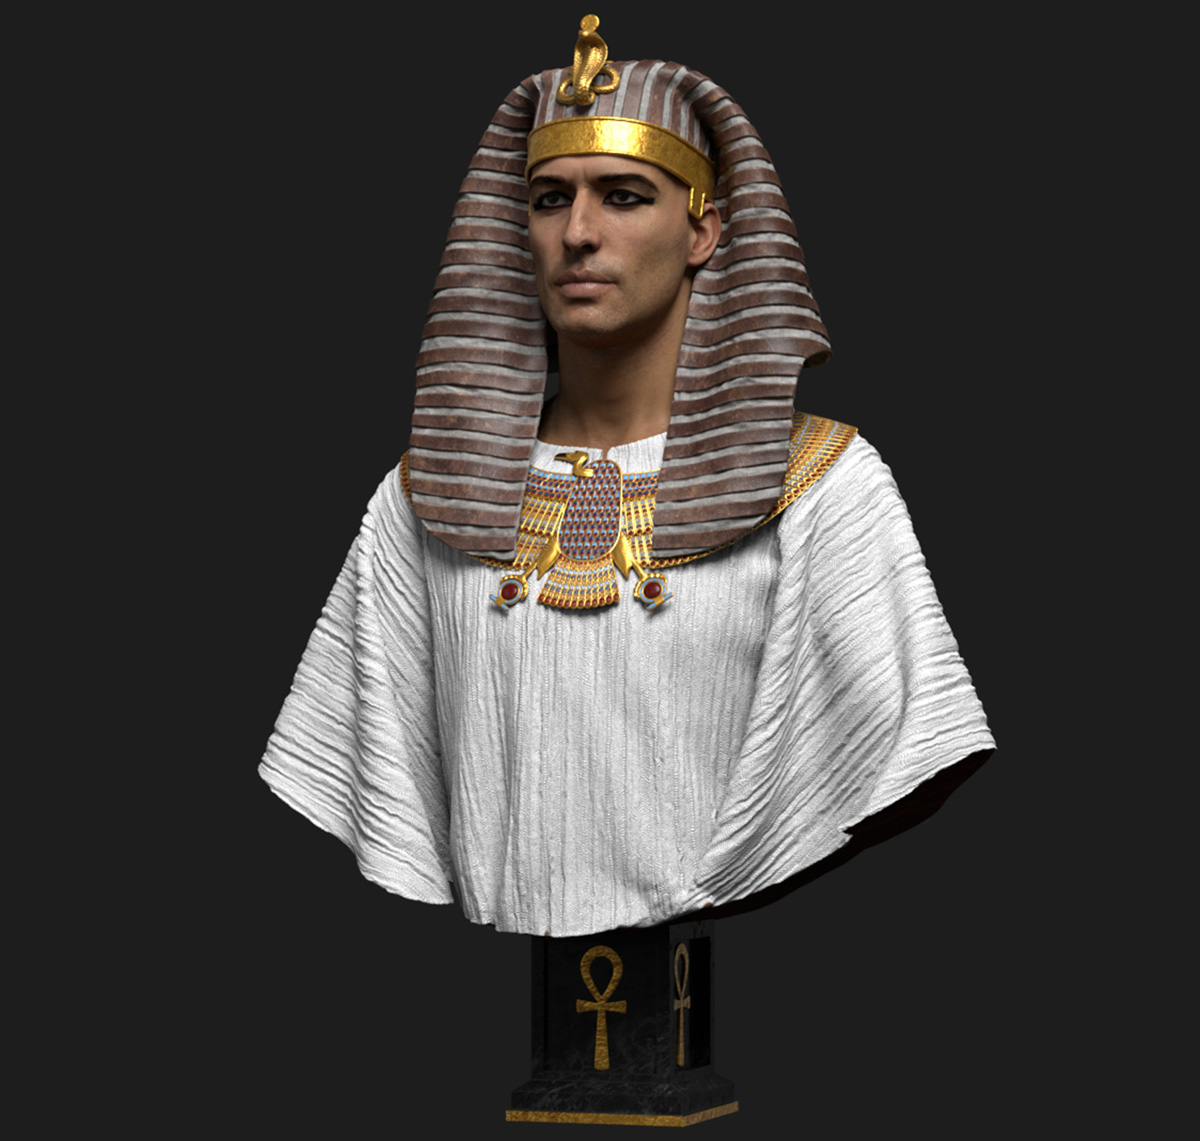 A 3D pharaoh created by 3D artist Deniz Ozemre